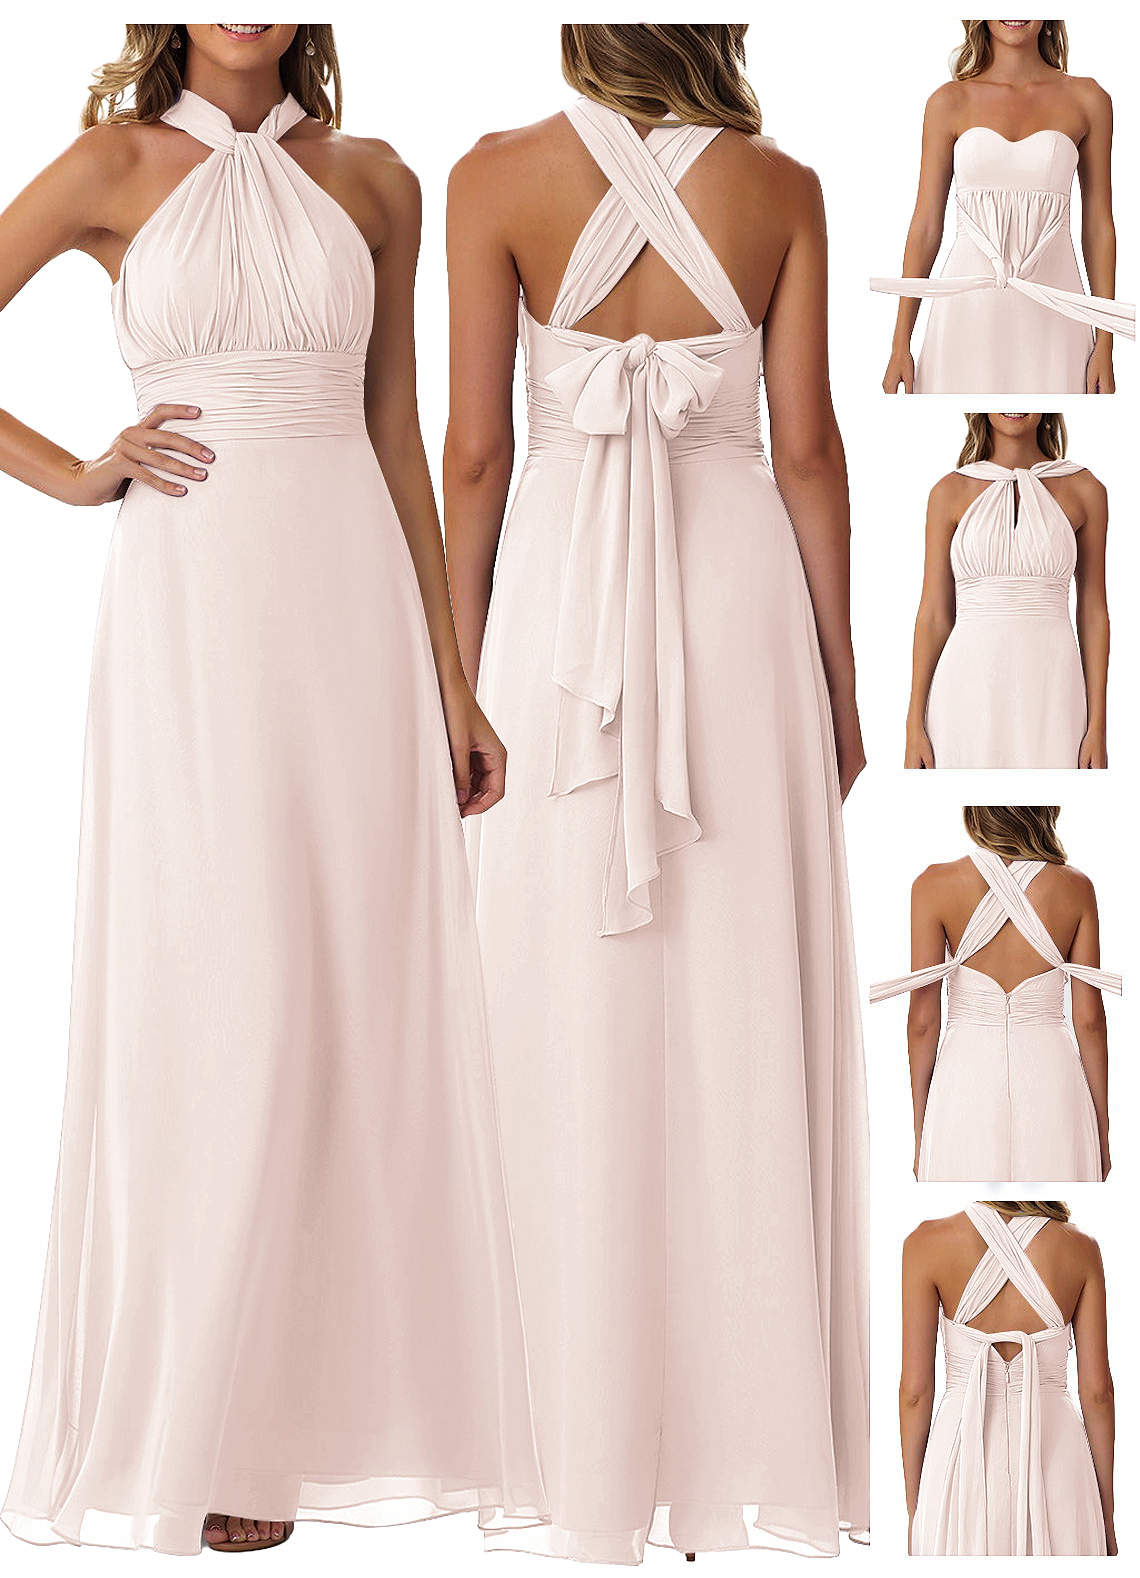 Azazie Fifi Bridesmaid Dresses A-Line Convertible Chiffon Floor-Length Dress image1